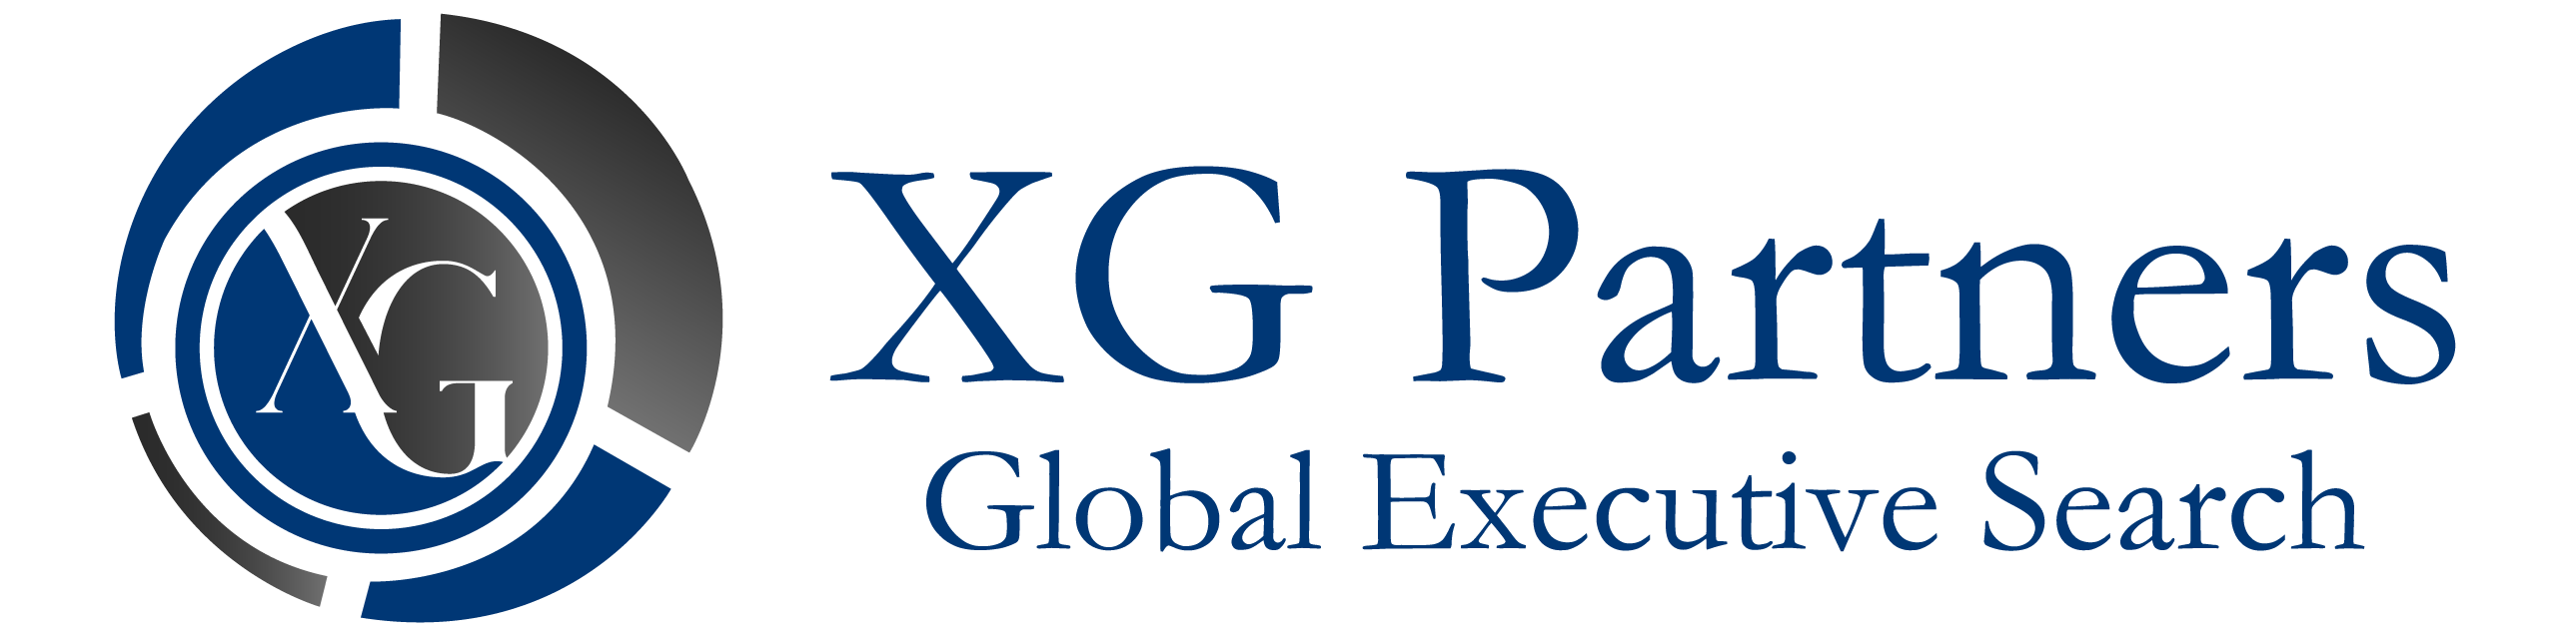 XG Partners logo